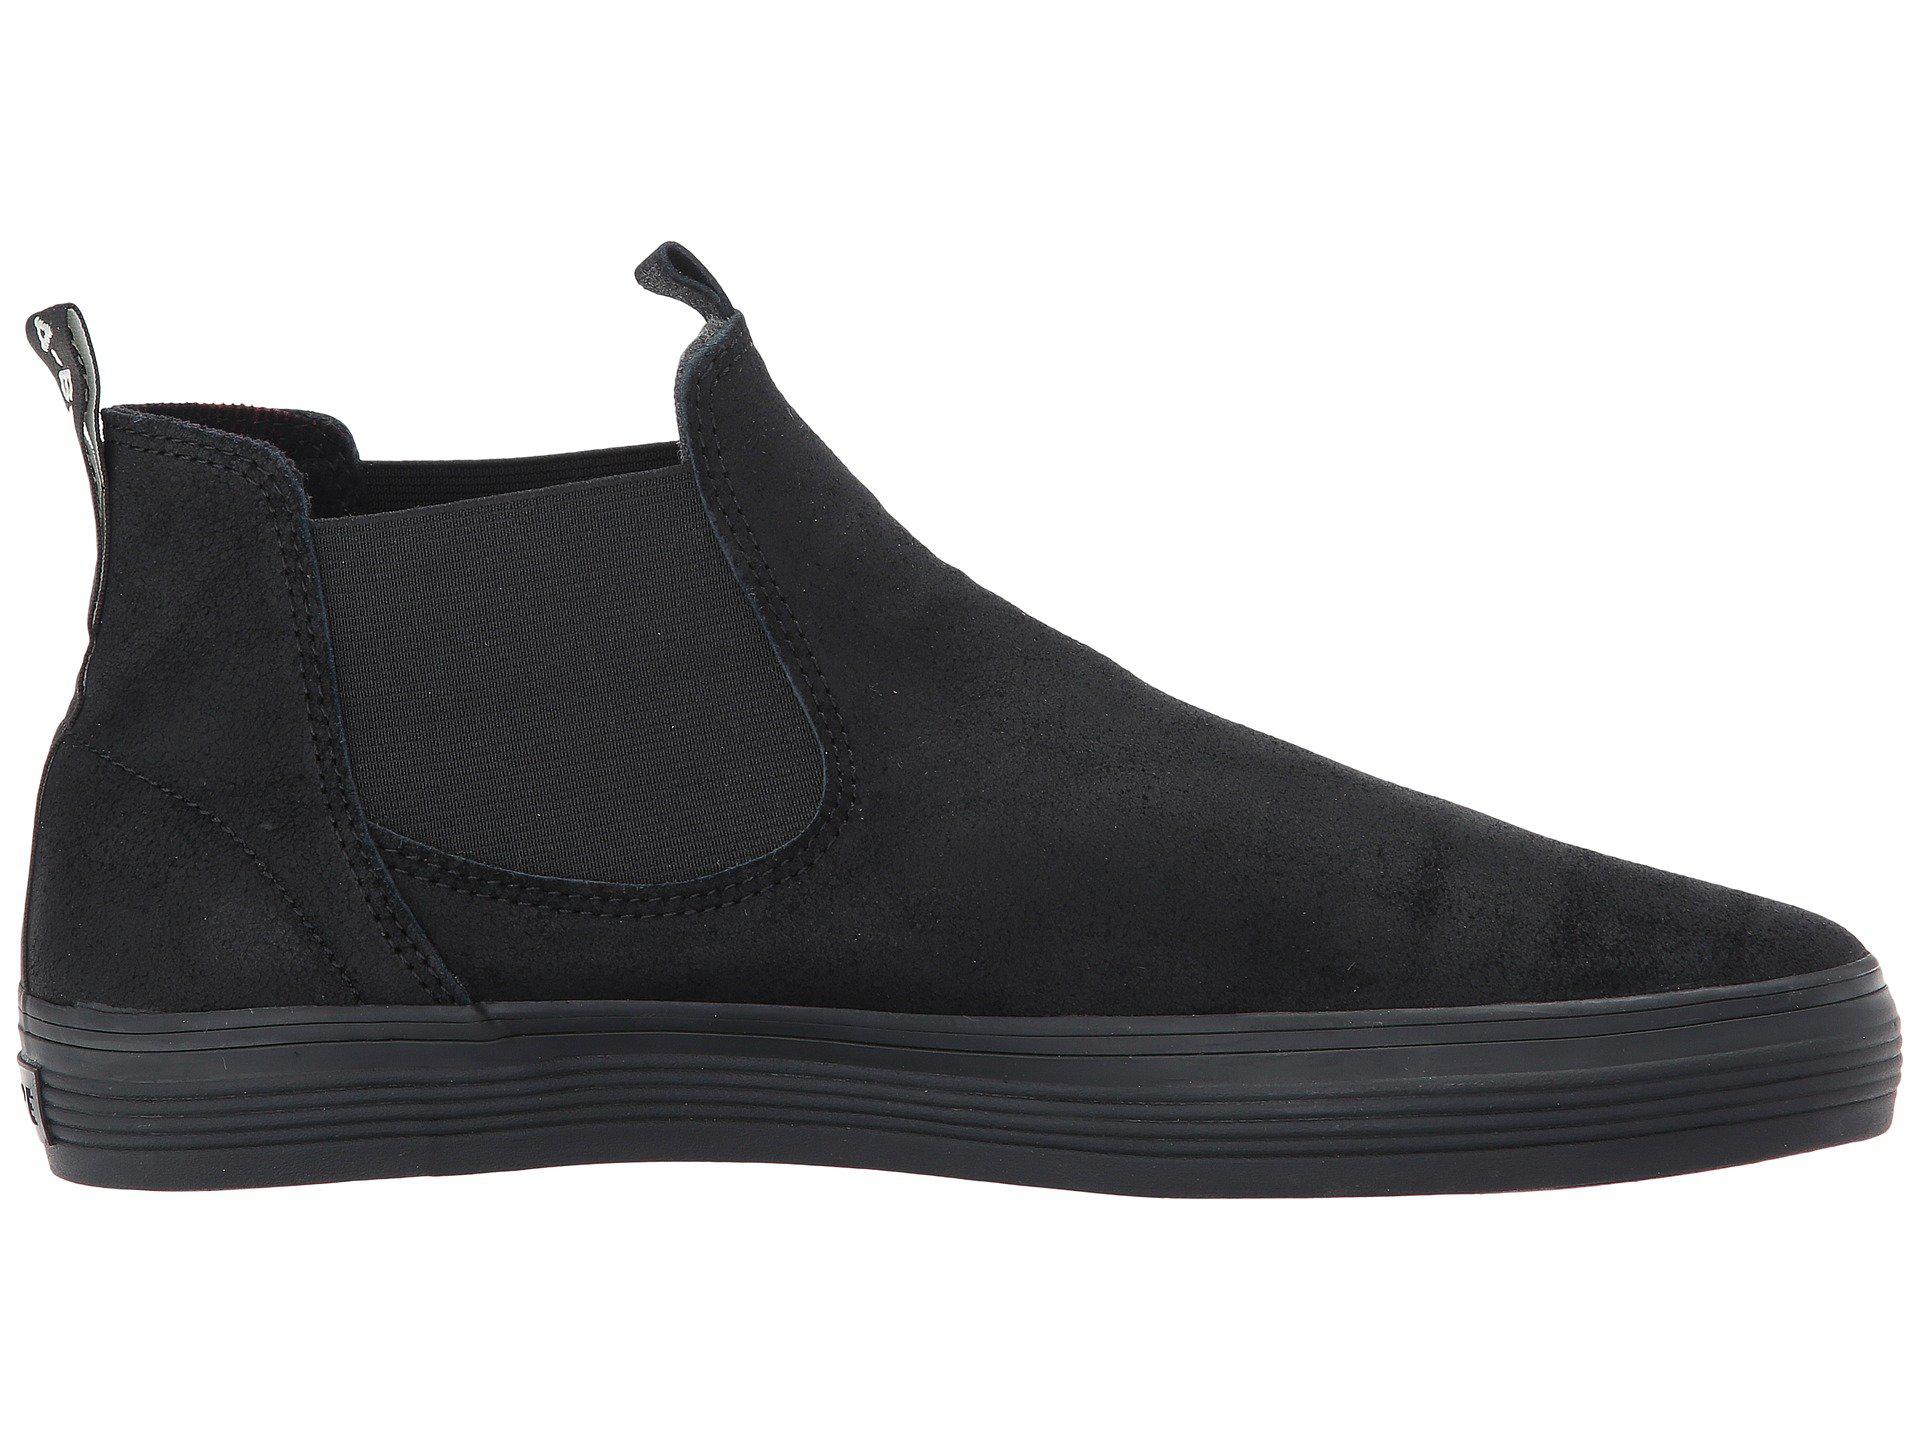 Globe Dover GBDOVER Mens Black Suede Slip On Skate Inspired Sneakers Shoes